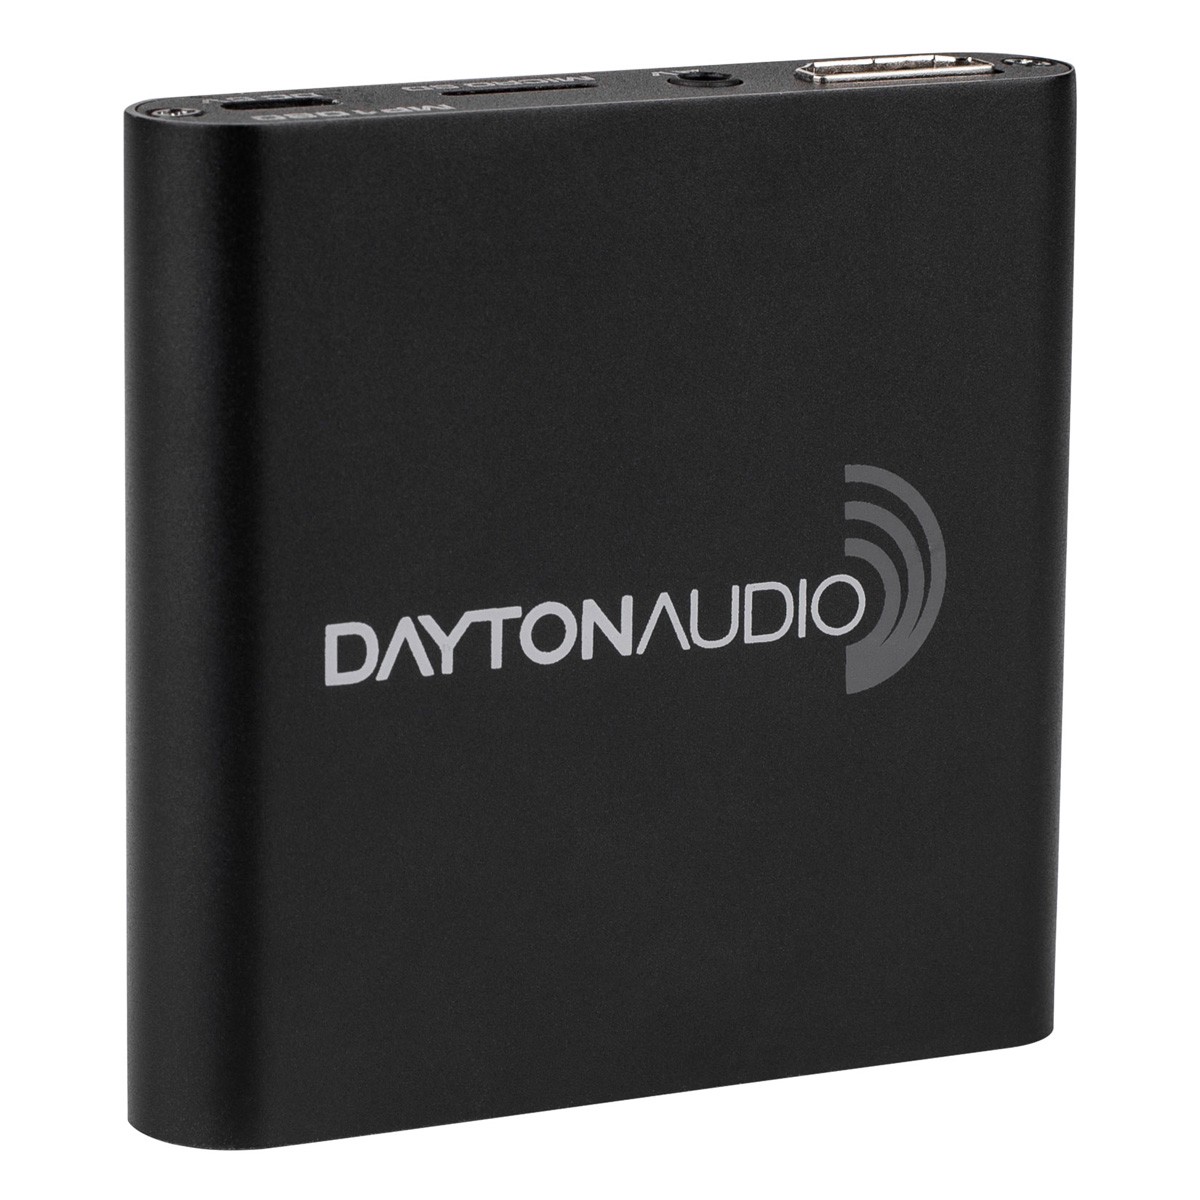 DAYTON AUDIO MP1080 Digital Audio Player Portable Player HD 1080P USB / Micro SD